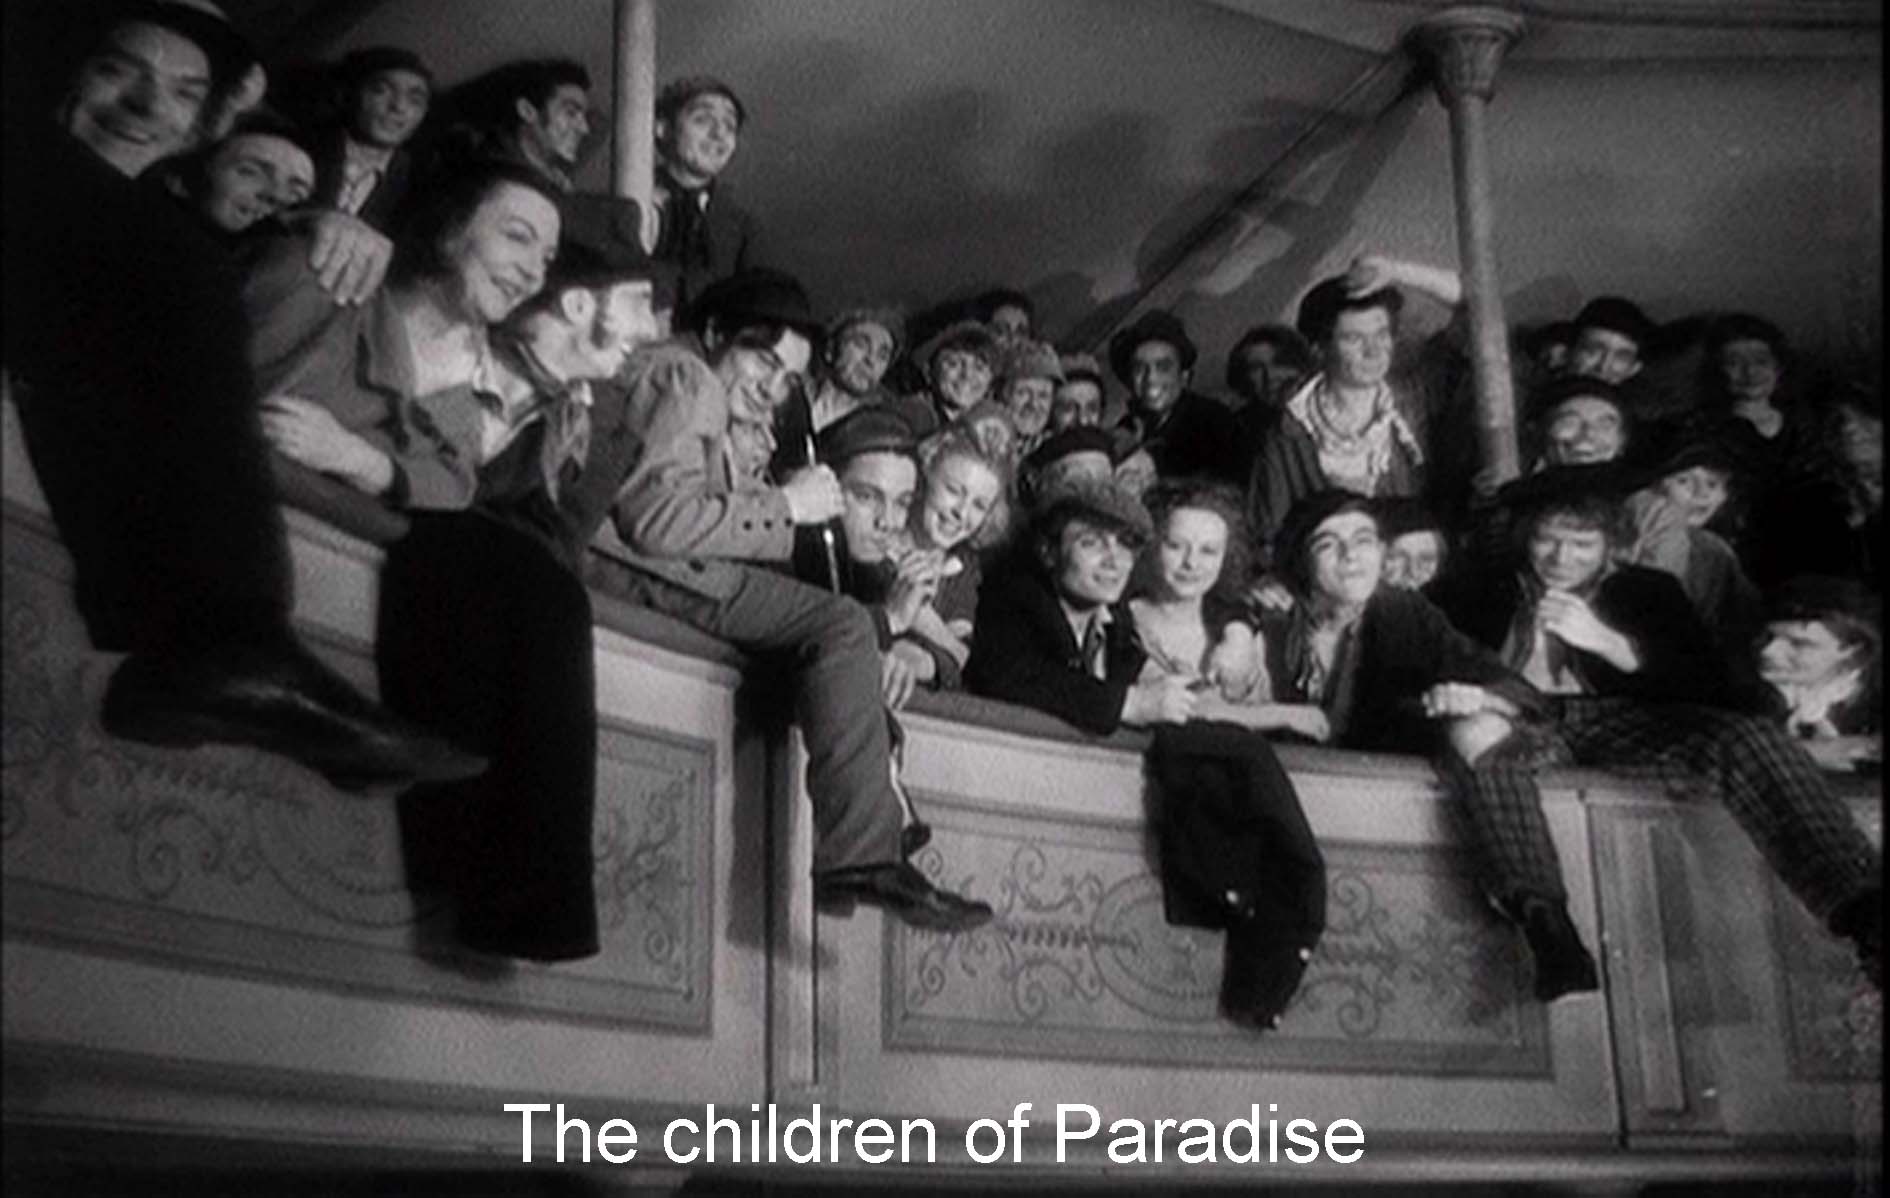 The children of Paradise